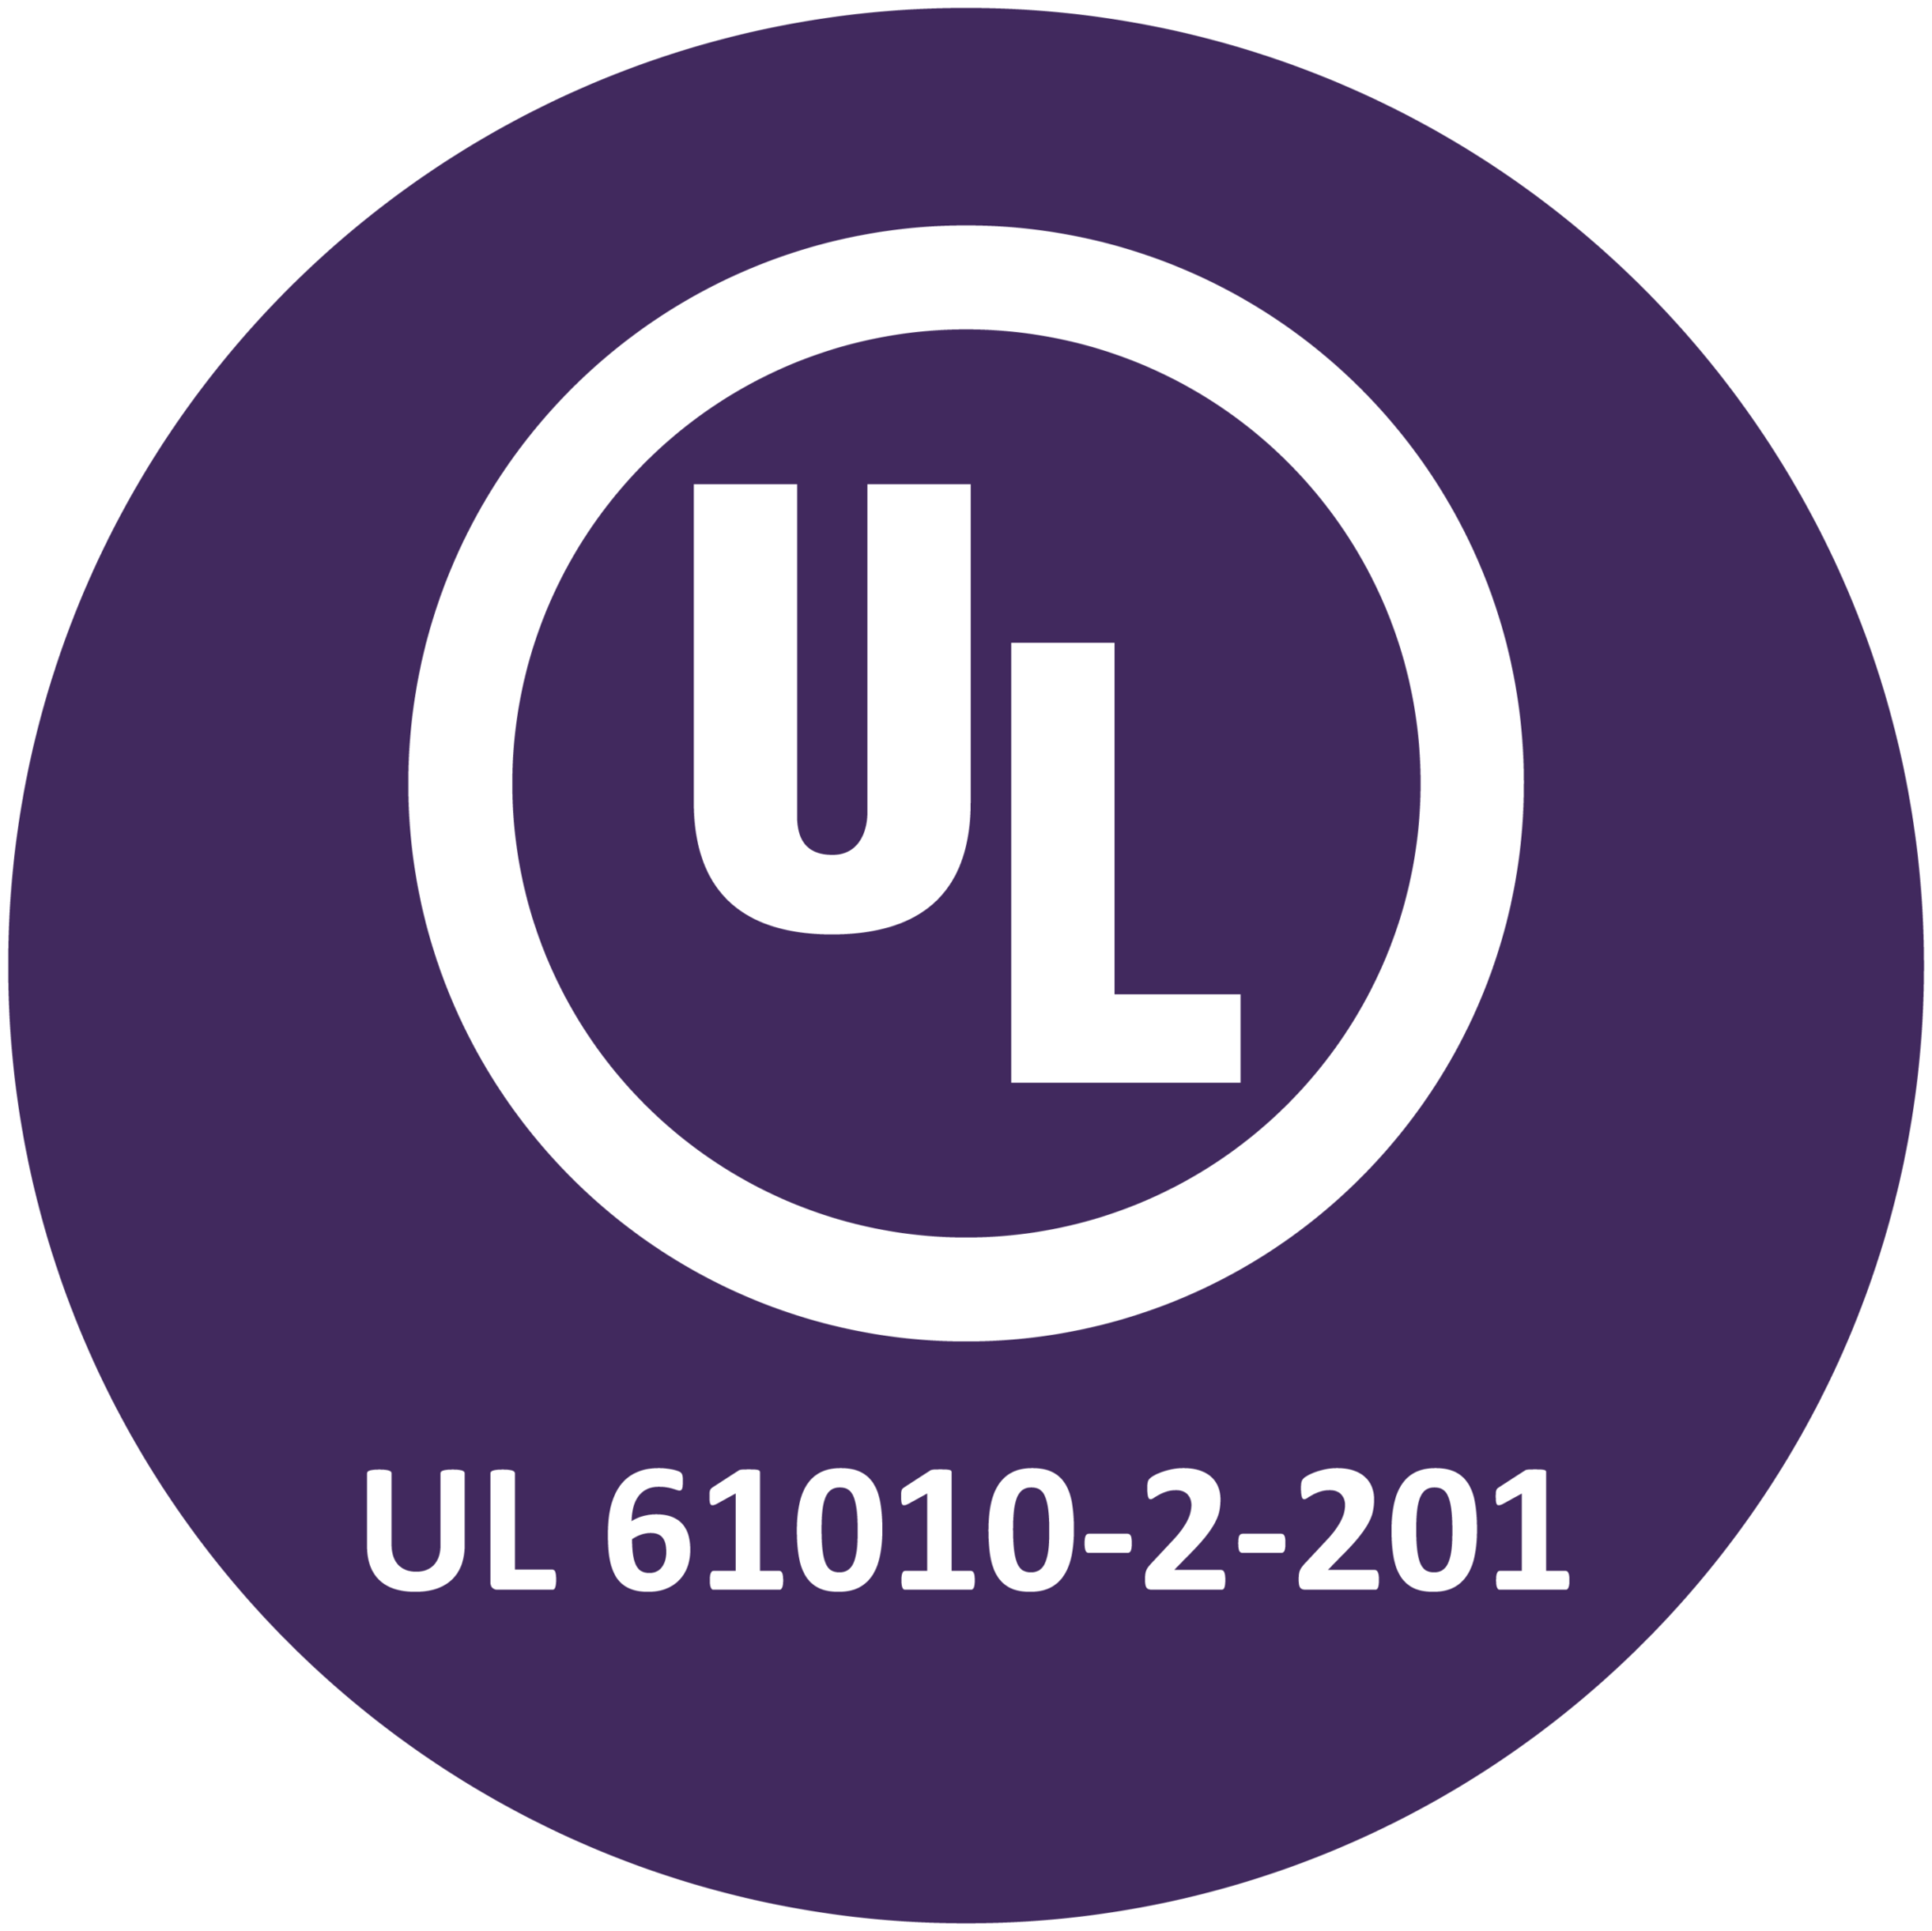 UL 61010-2-201